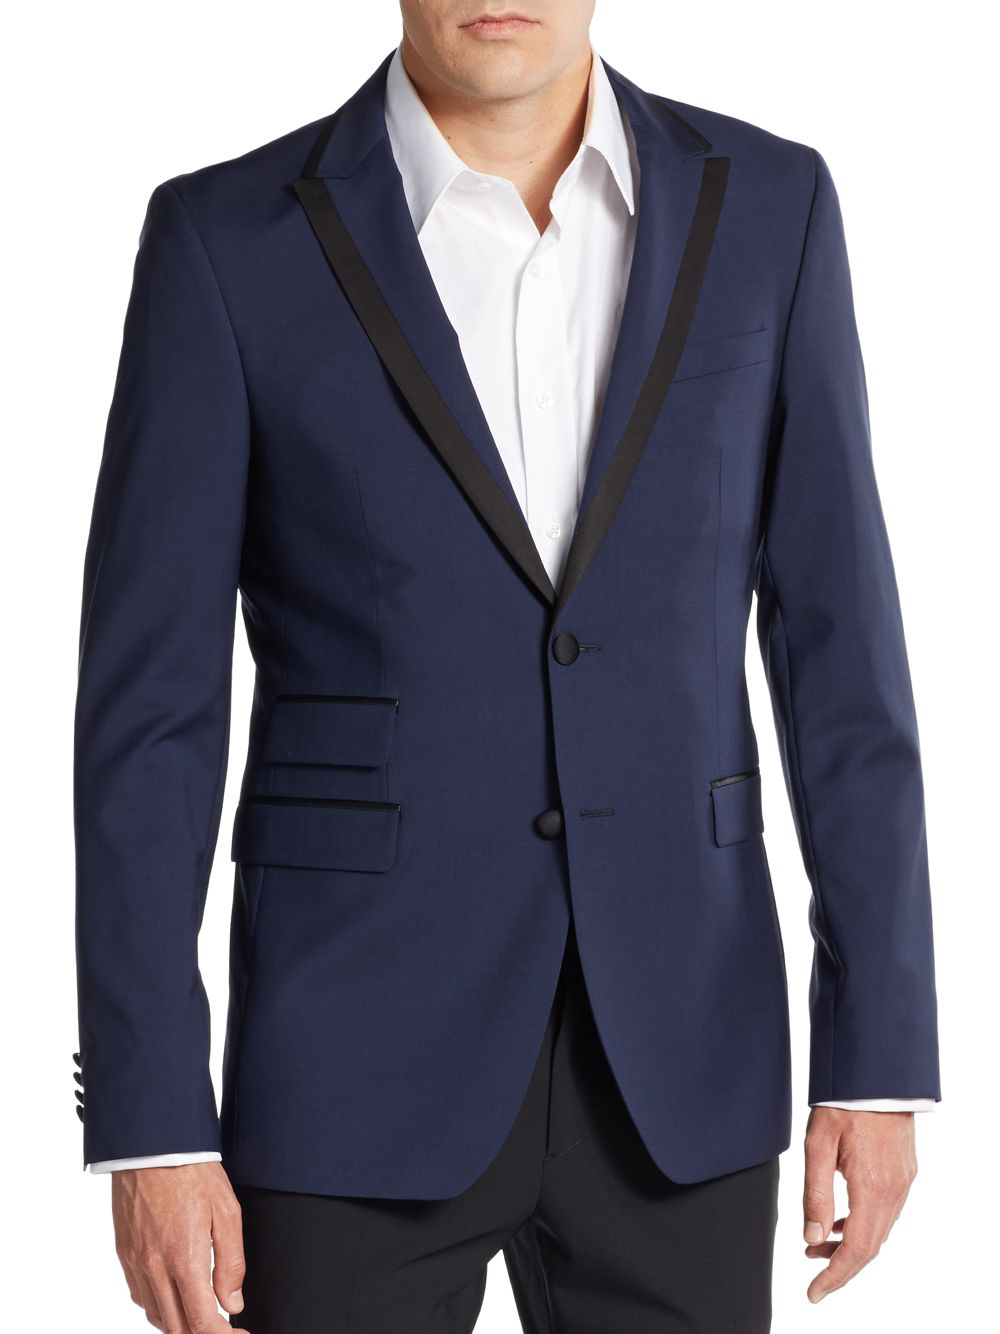 Sand Slim-Fit Wool & Mohair Tuxedo Jacket in Navy (Blue) for Men - Lyst